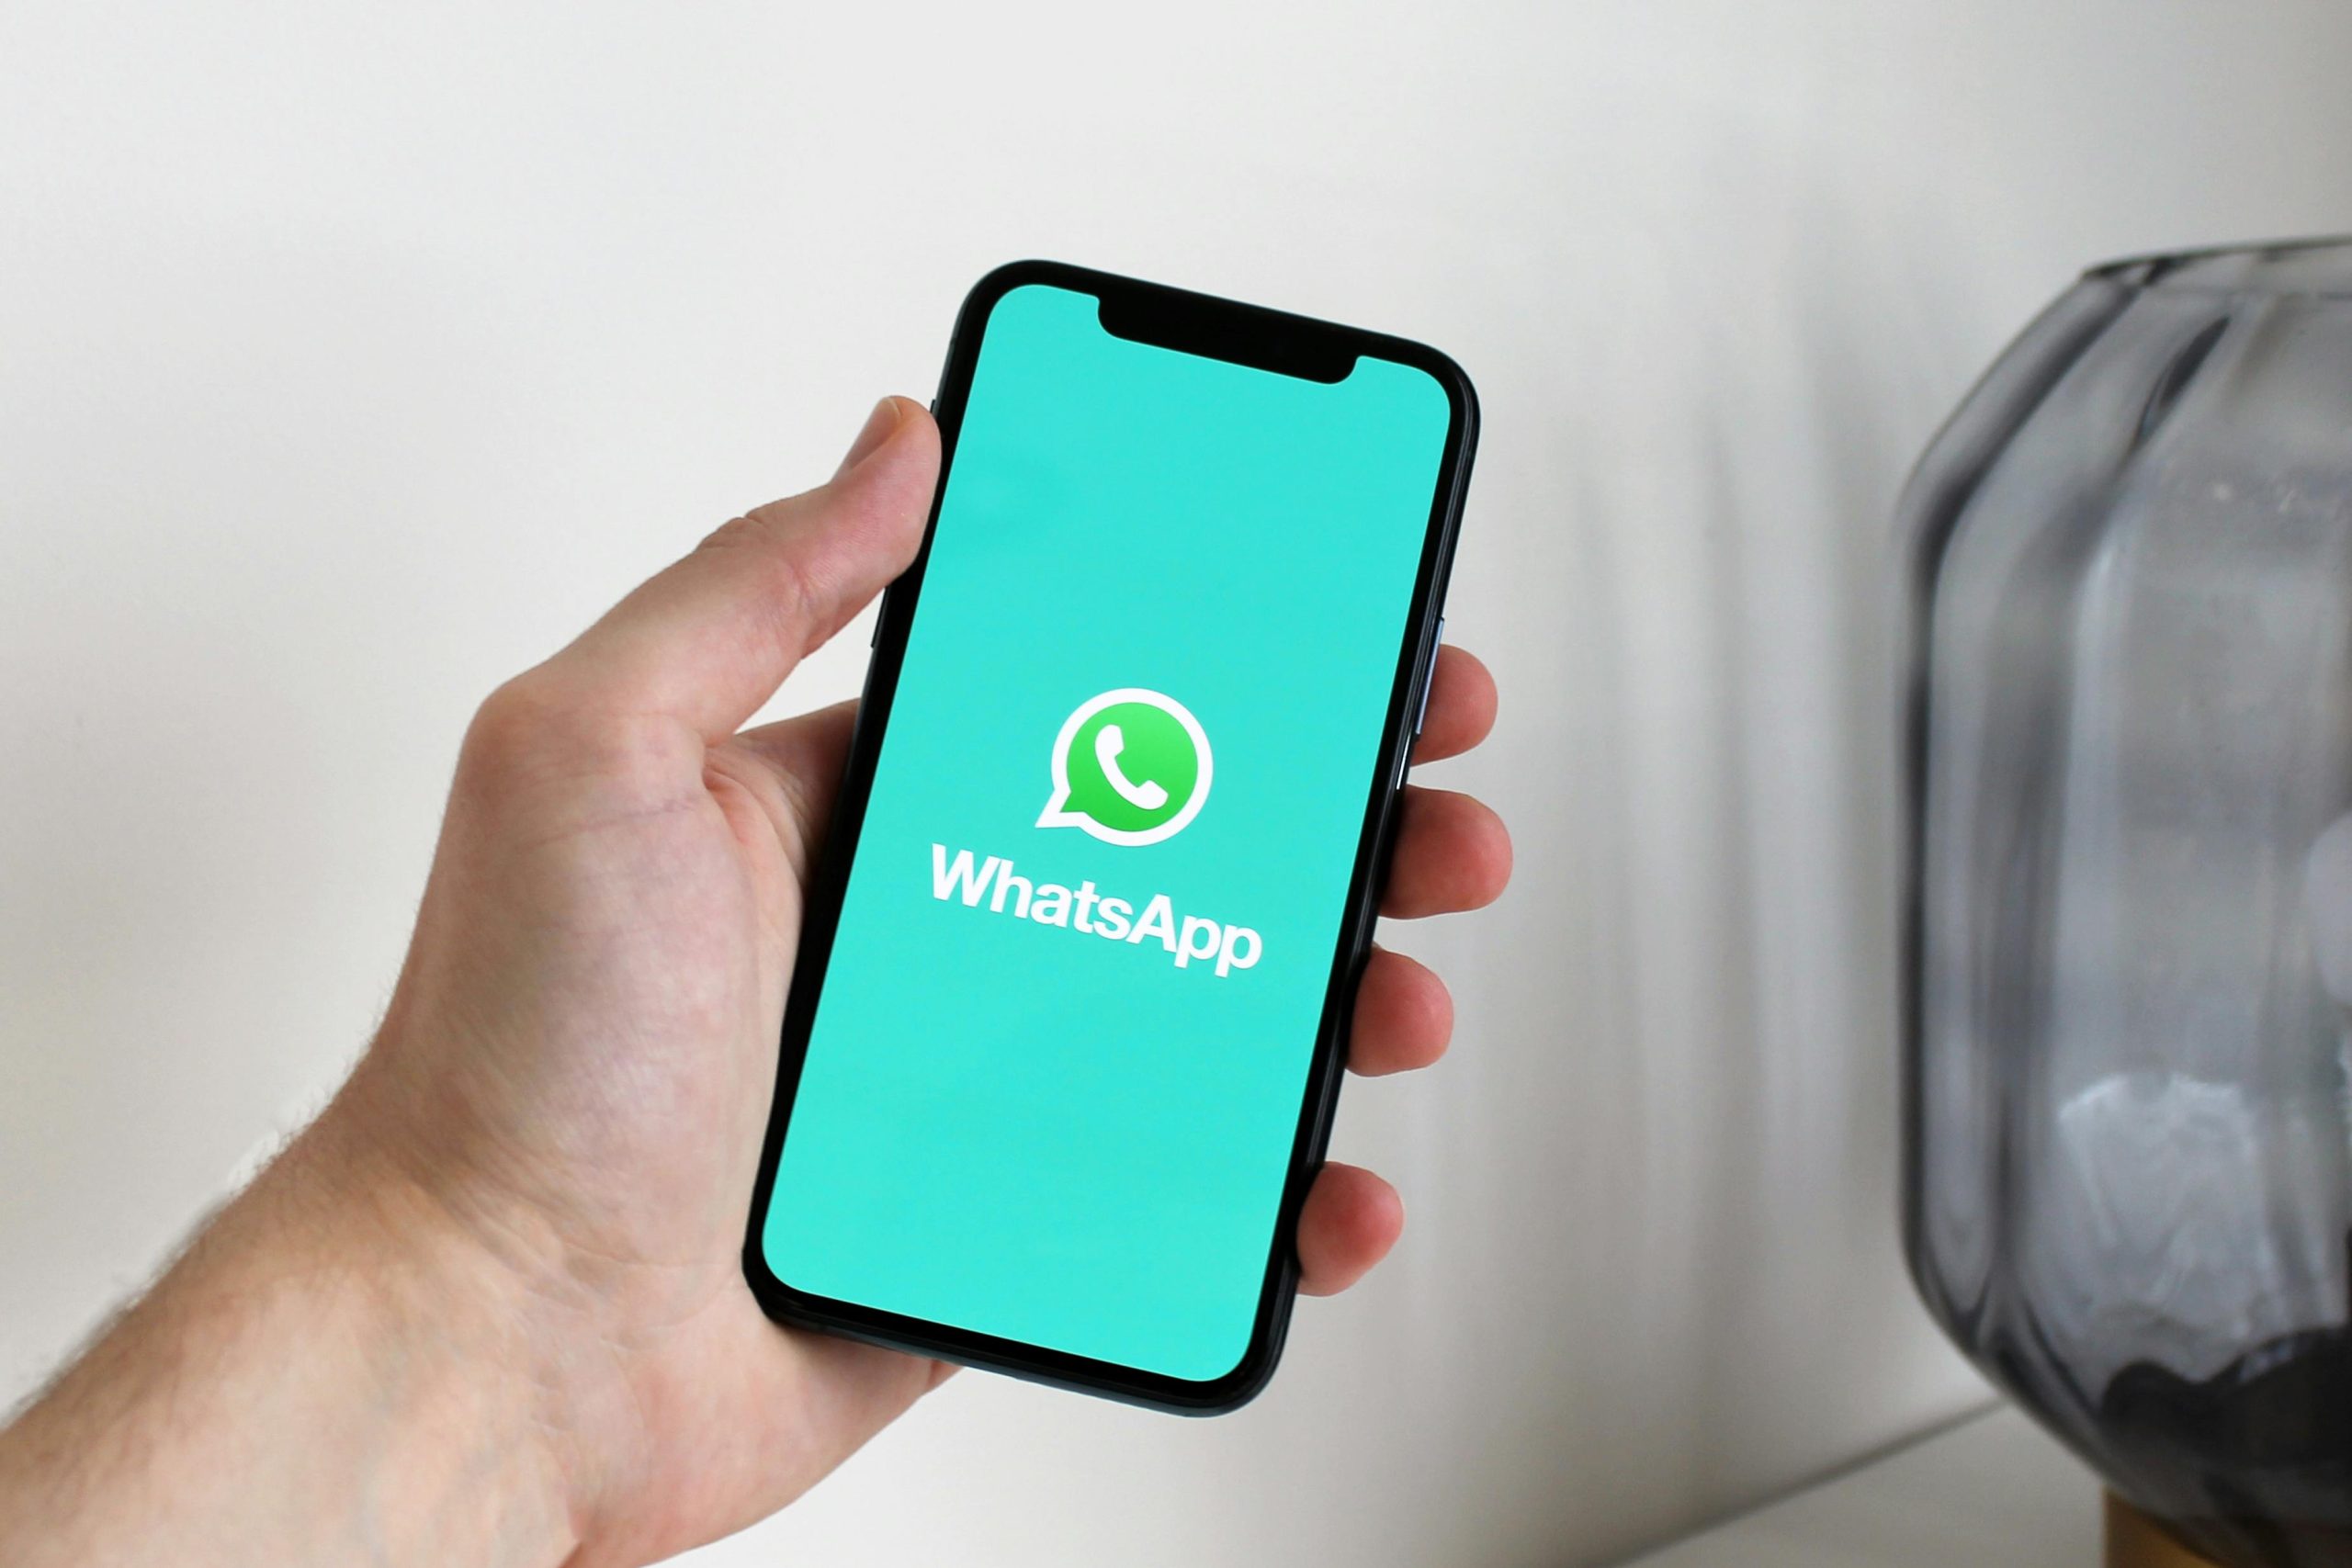 WhatsApp building file transfer like Apple's AirDrop